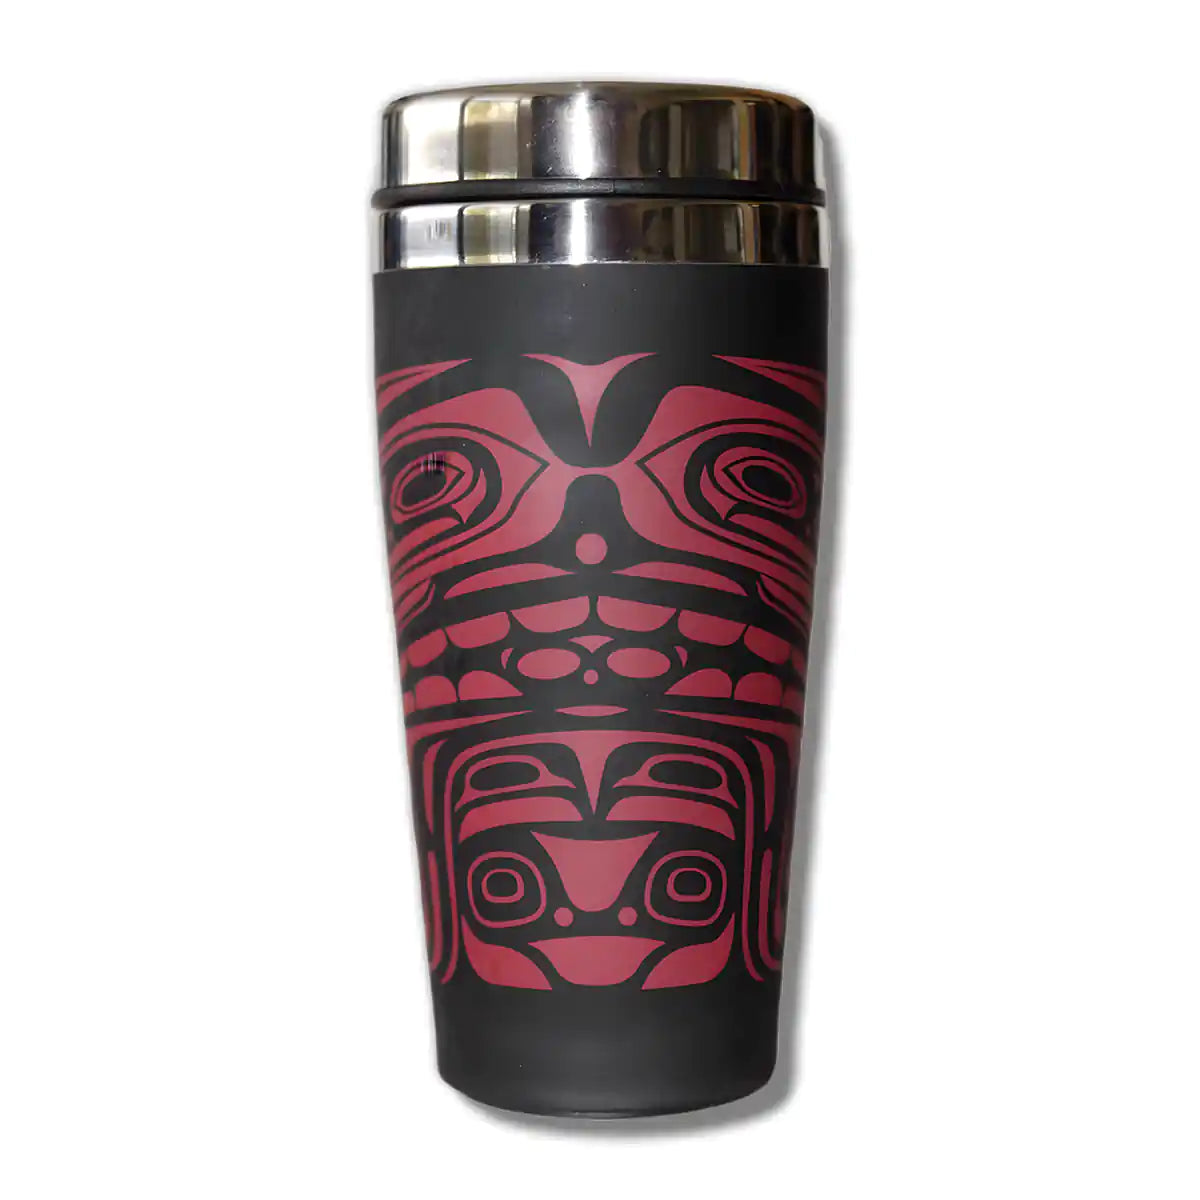 Native design chief of the seas 16oz stainless steel travel mug